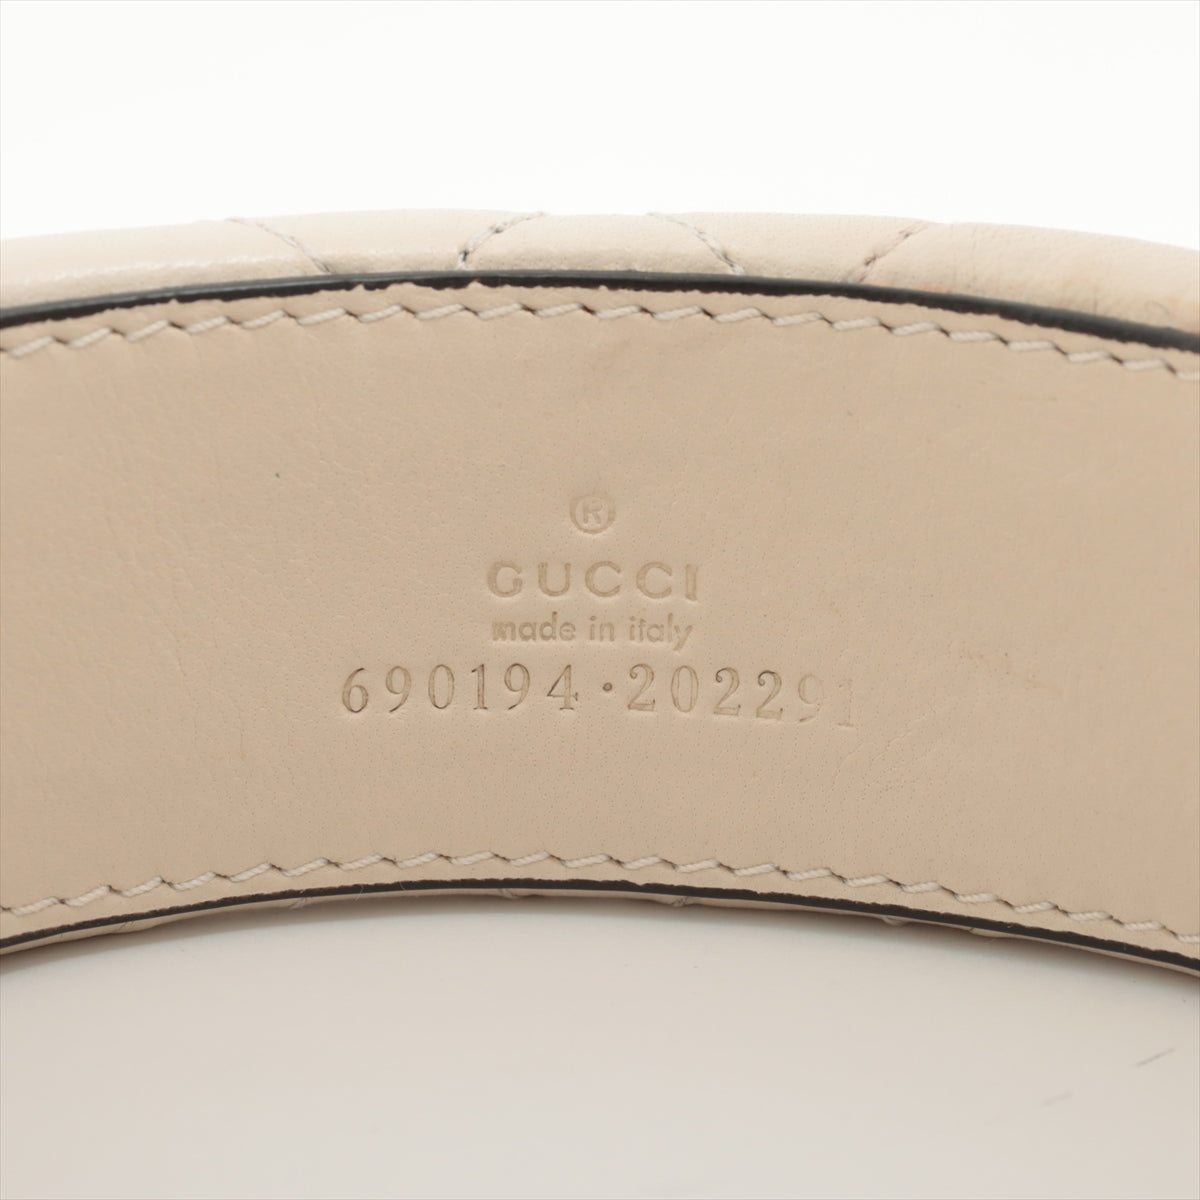 Gucci Headband Leather White 690194